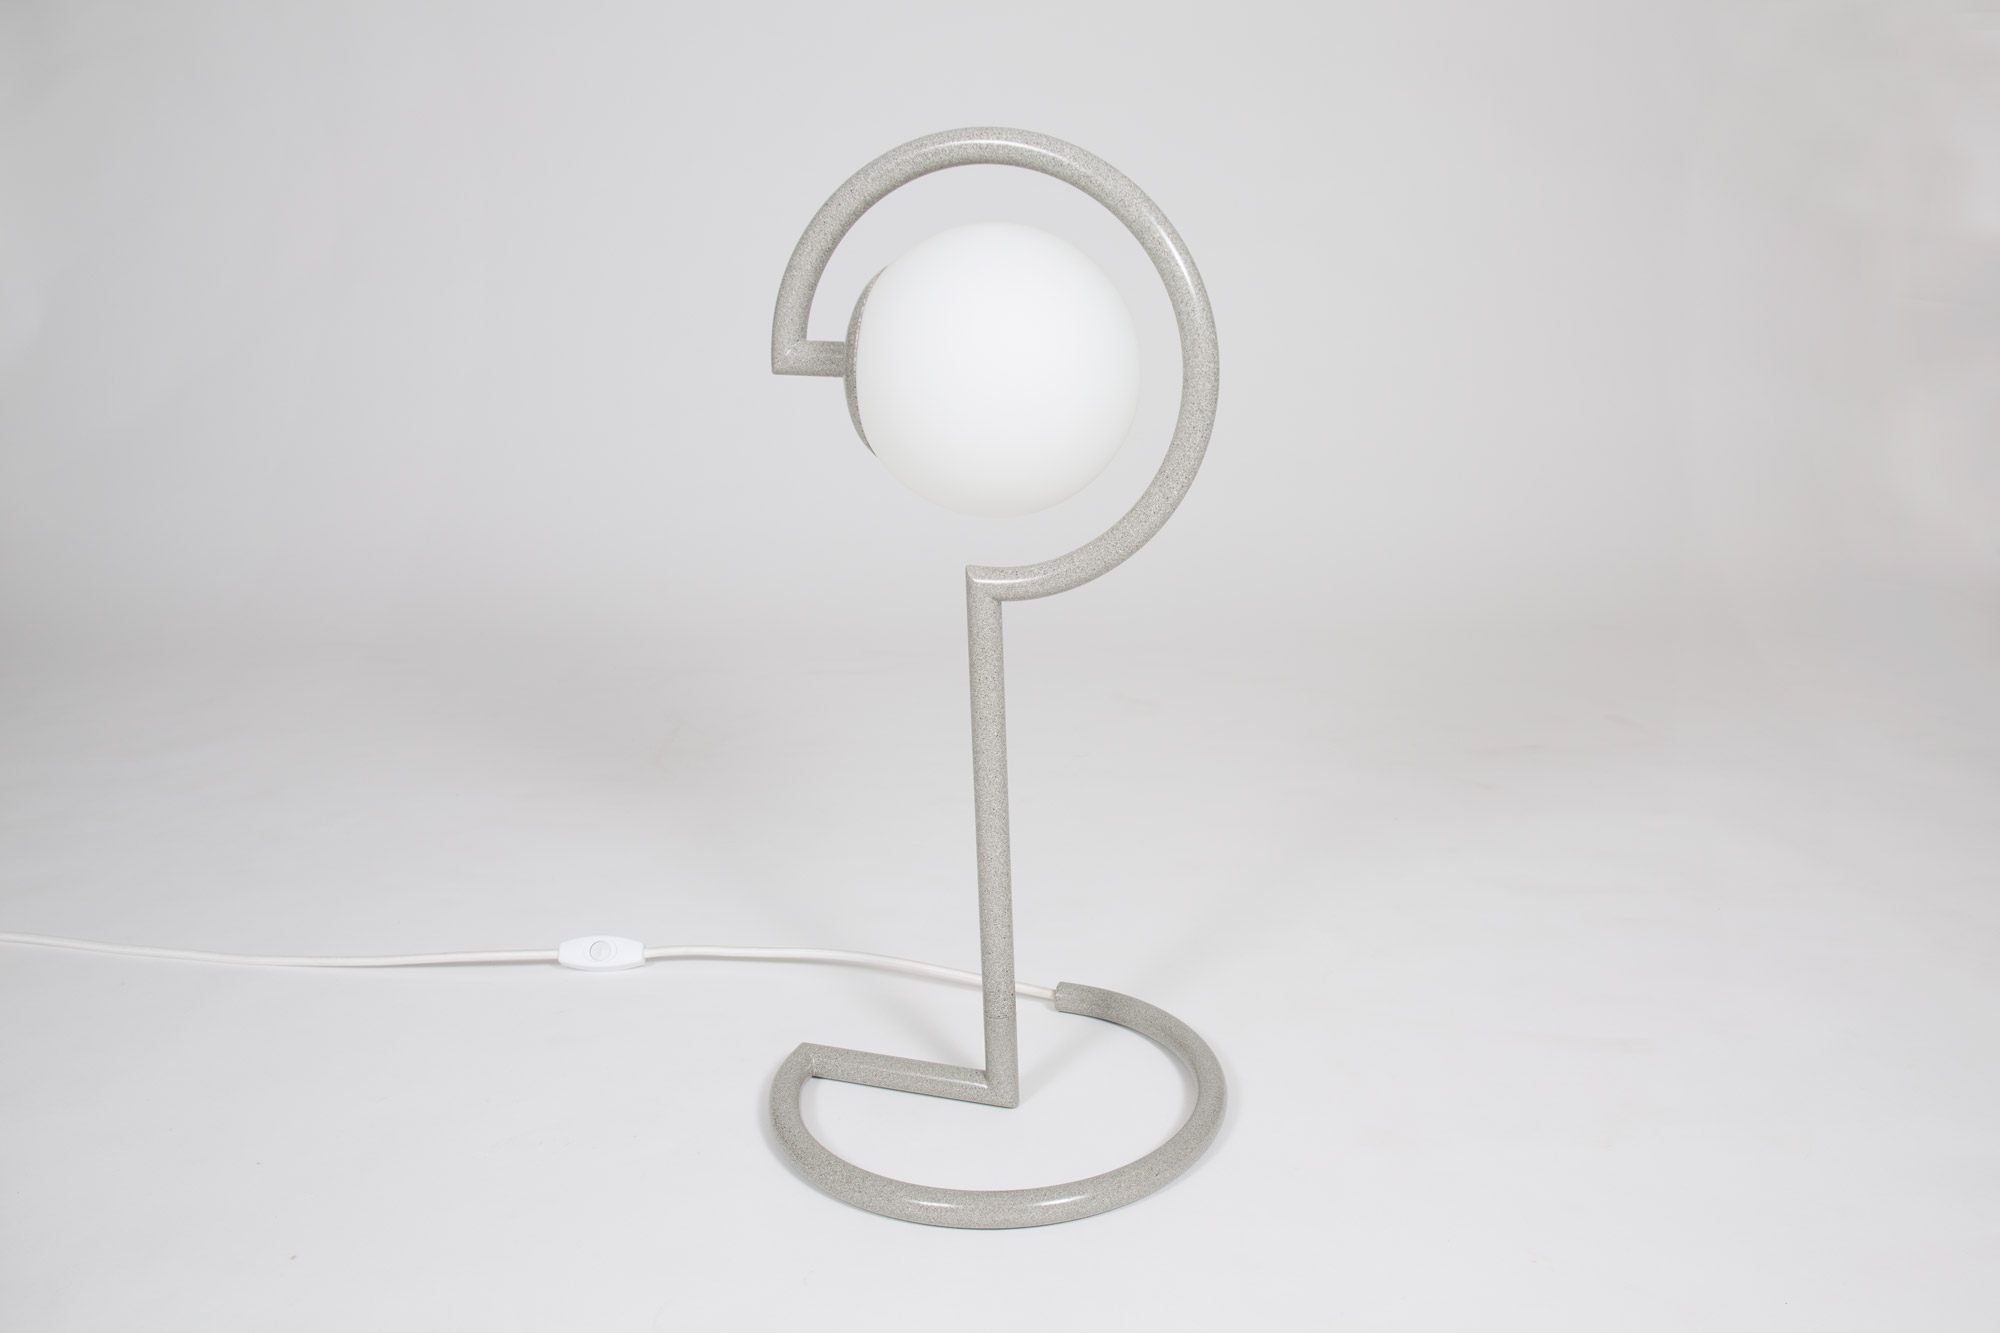 Orbit Table Lamp